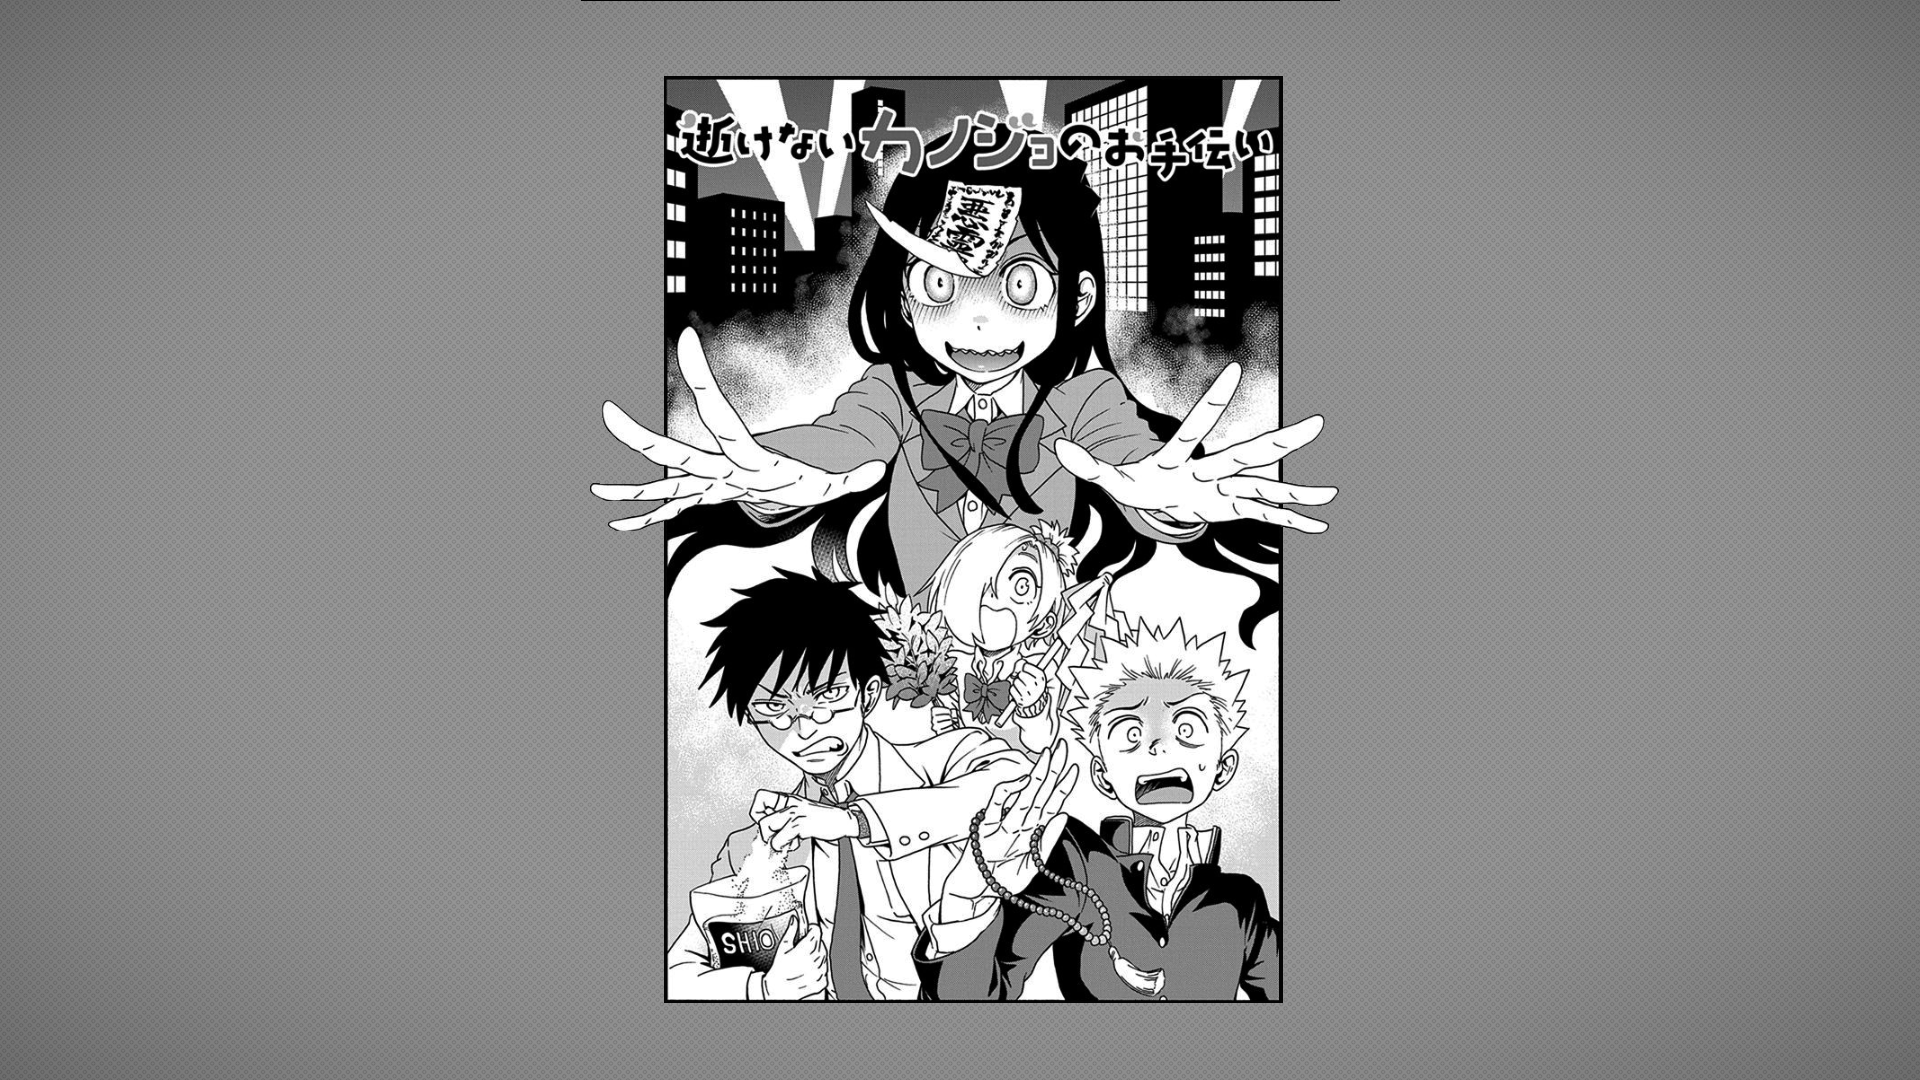 Manga Monochrome Simple Background Kanji Japanese Letters Scary Face Horror Horror Anime Anime Girls 1920x1080